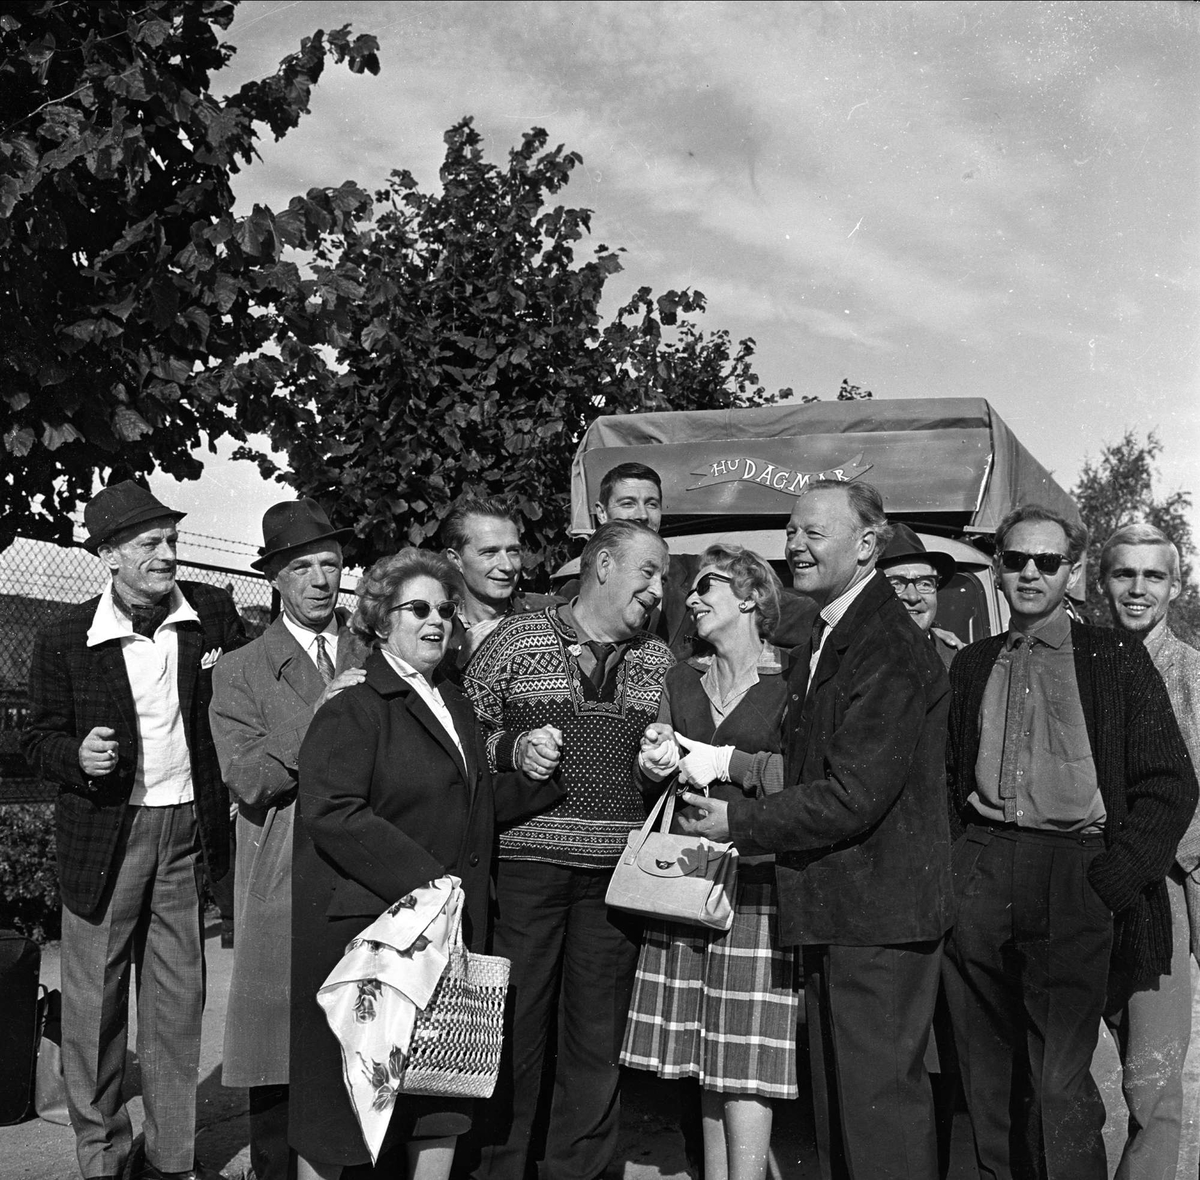 Alf Prøysen sammen med en gruppe mennesker, foran en buss med reklame for skuespillet "Hu Dagmar". NKL befaring, Oslo, 02.09.1964.